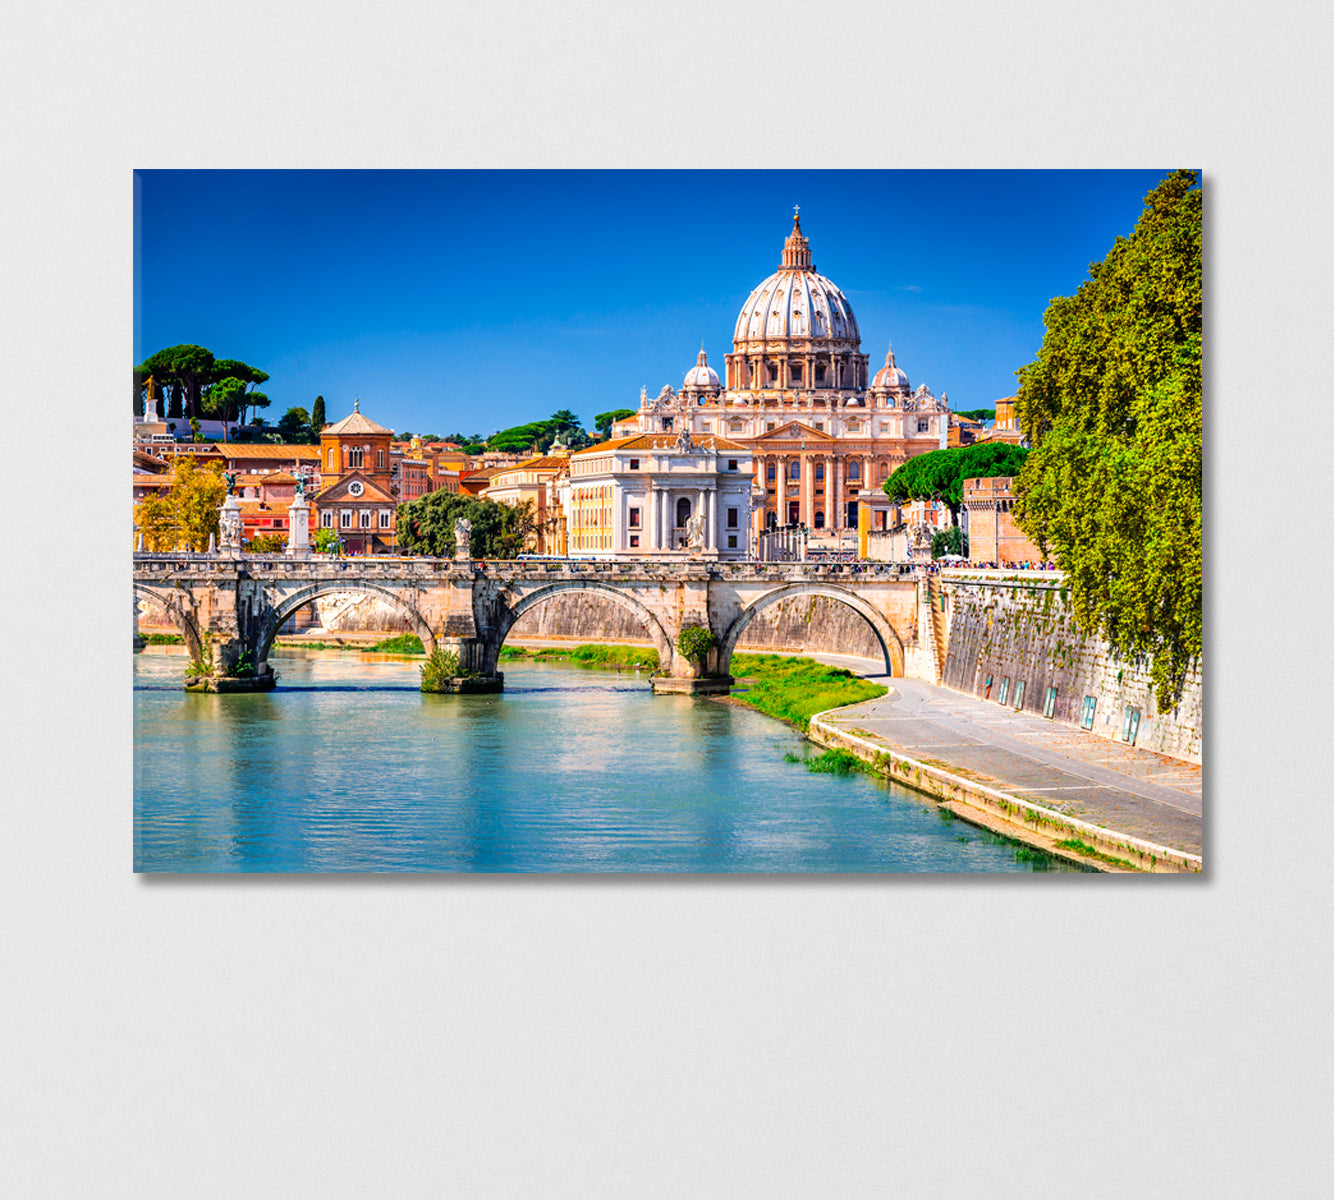 Sant Angelo Bridge and St Peter's Basilica Rome Italy Canvas Print-Canvas Print-CetArt-1 Panel-24x16 inches-CetArt